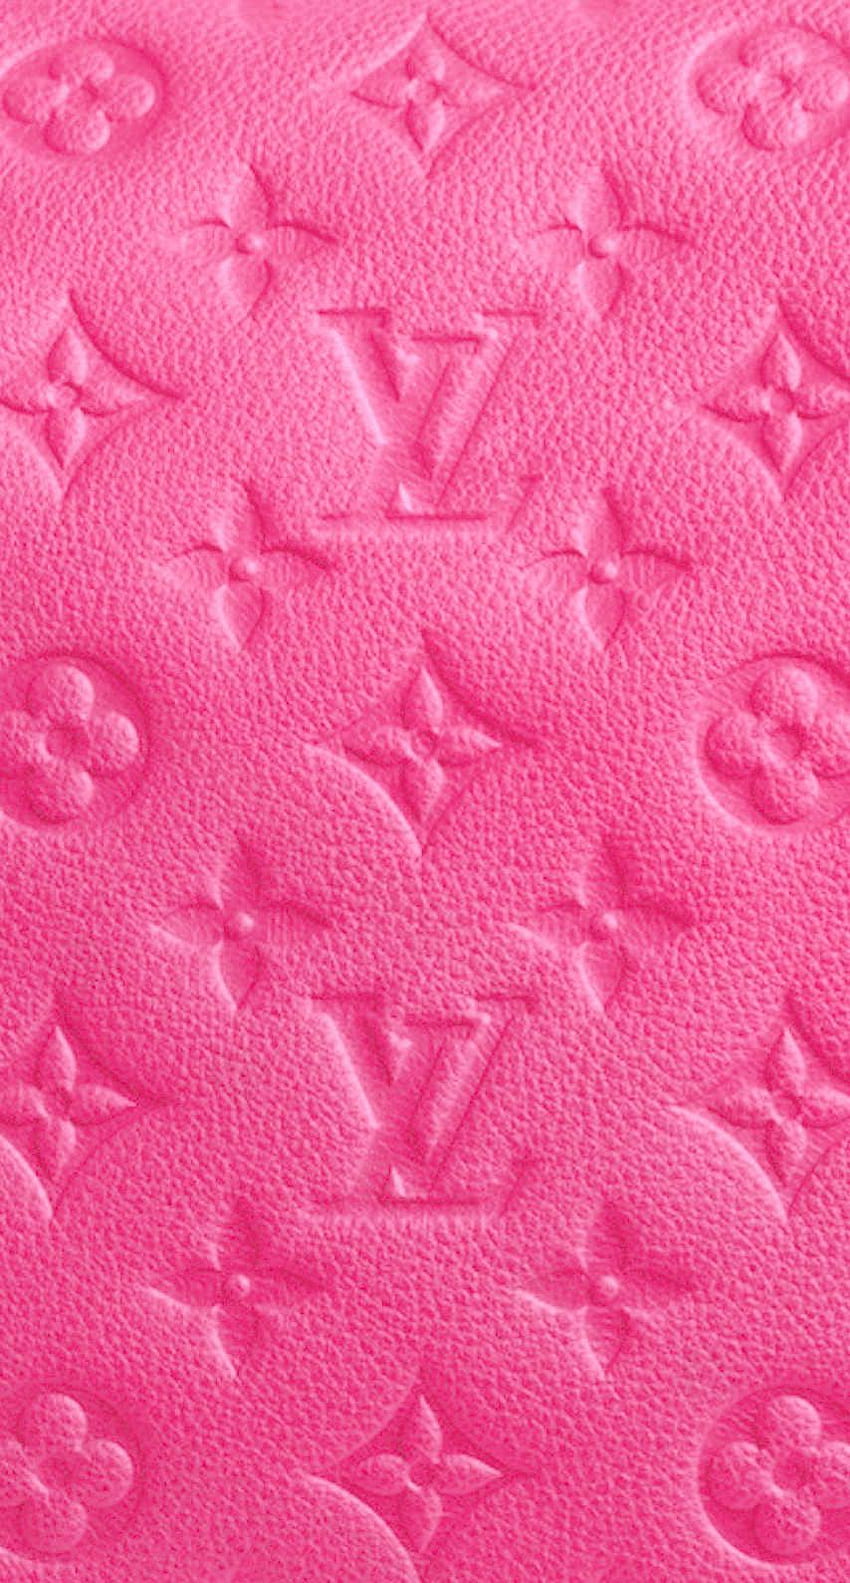 Sparkling LOUIS Vuitton - Luxurydotcom  Louis vuitton iphone wallpaper, Louis  vuitton background, Bling wallpaper